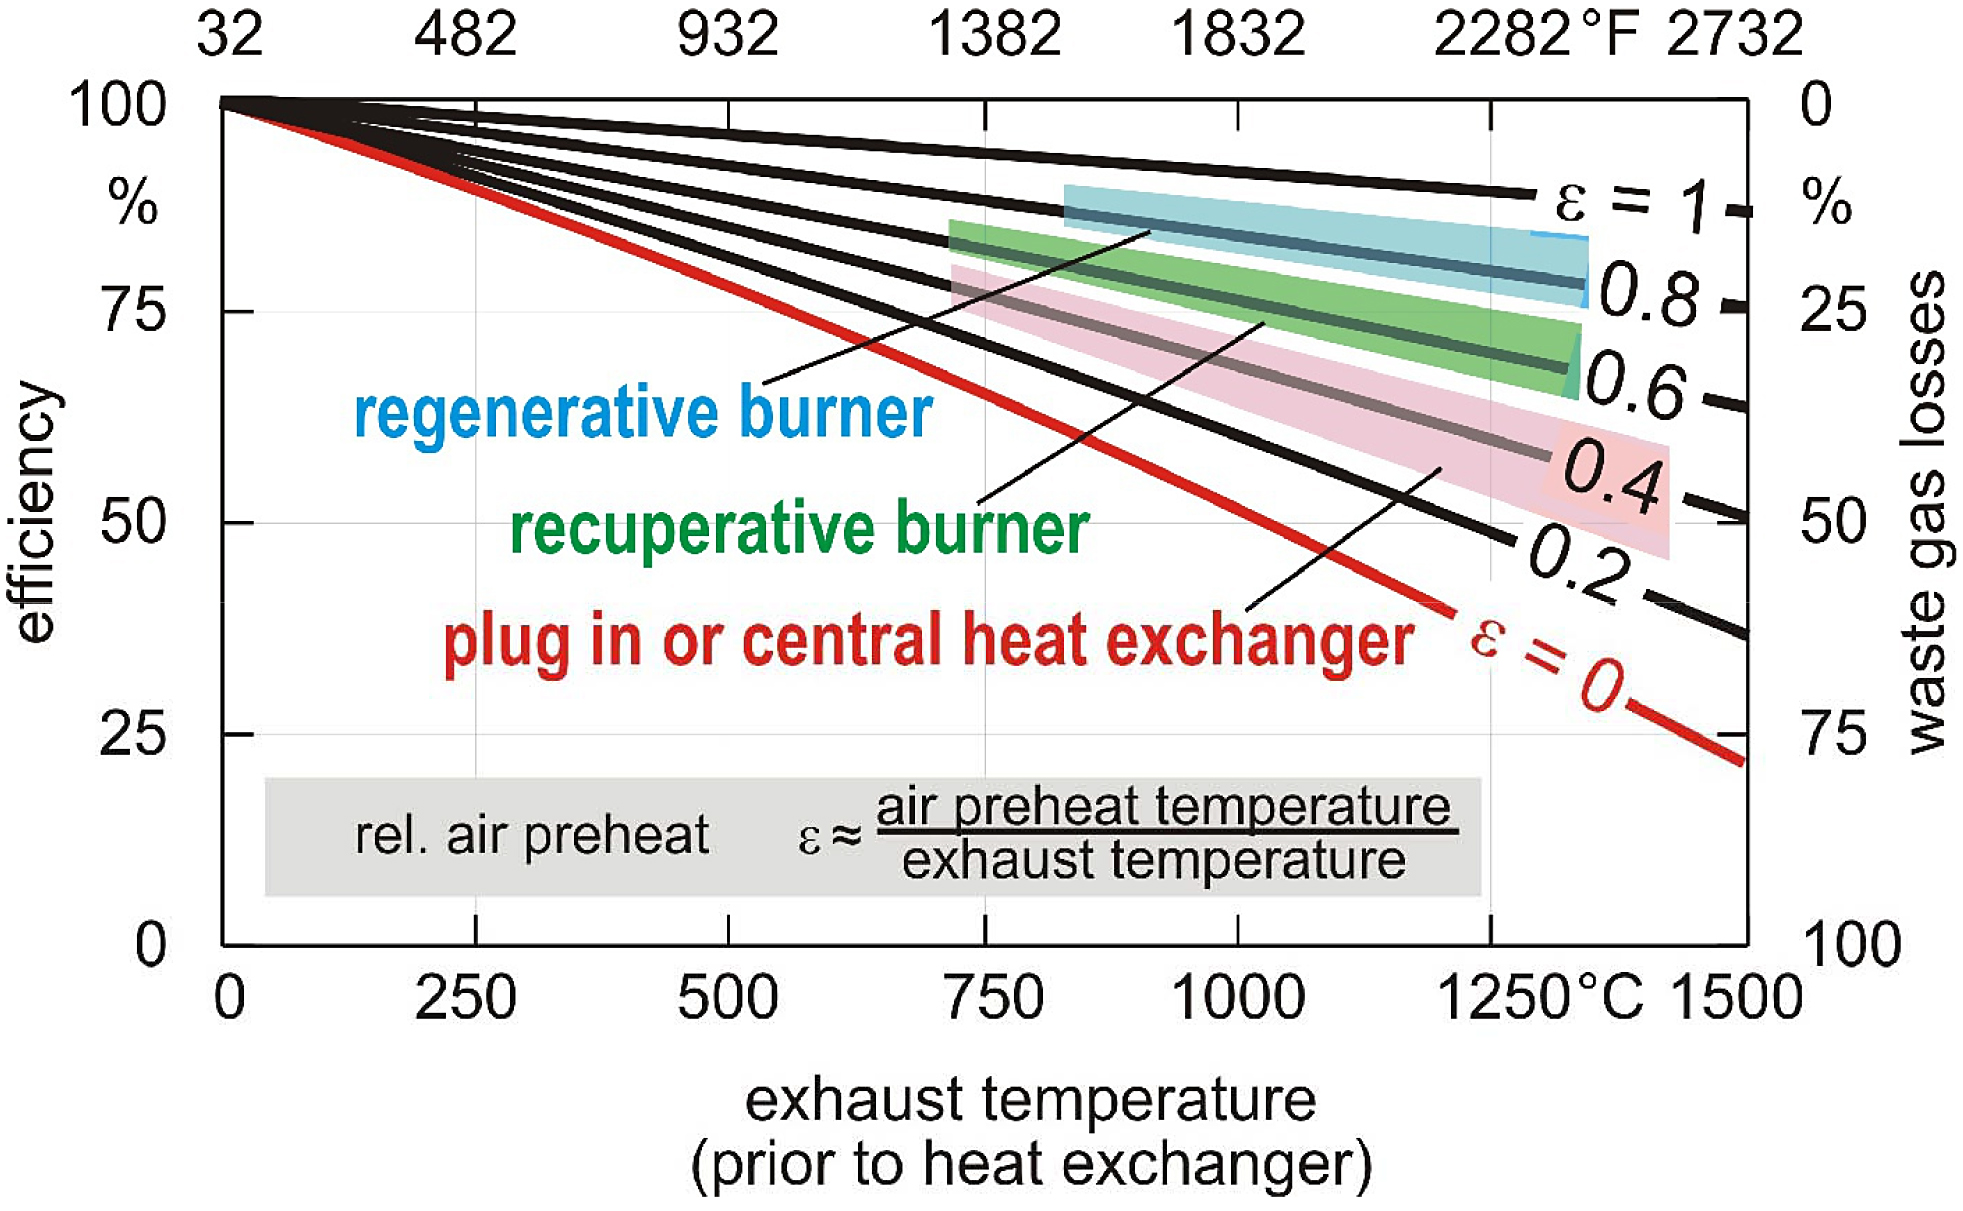 High Efficiency Gas Burners Make Good Economic Sense Thermal Processing Magazine